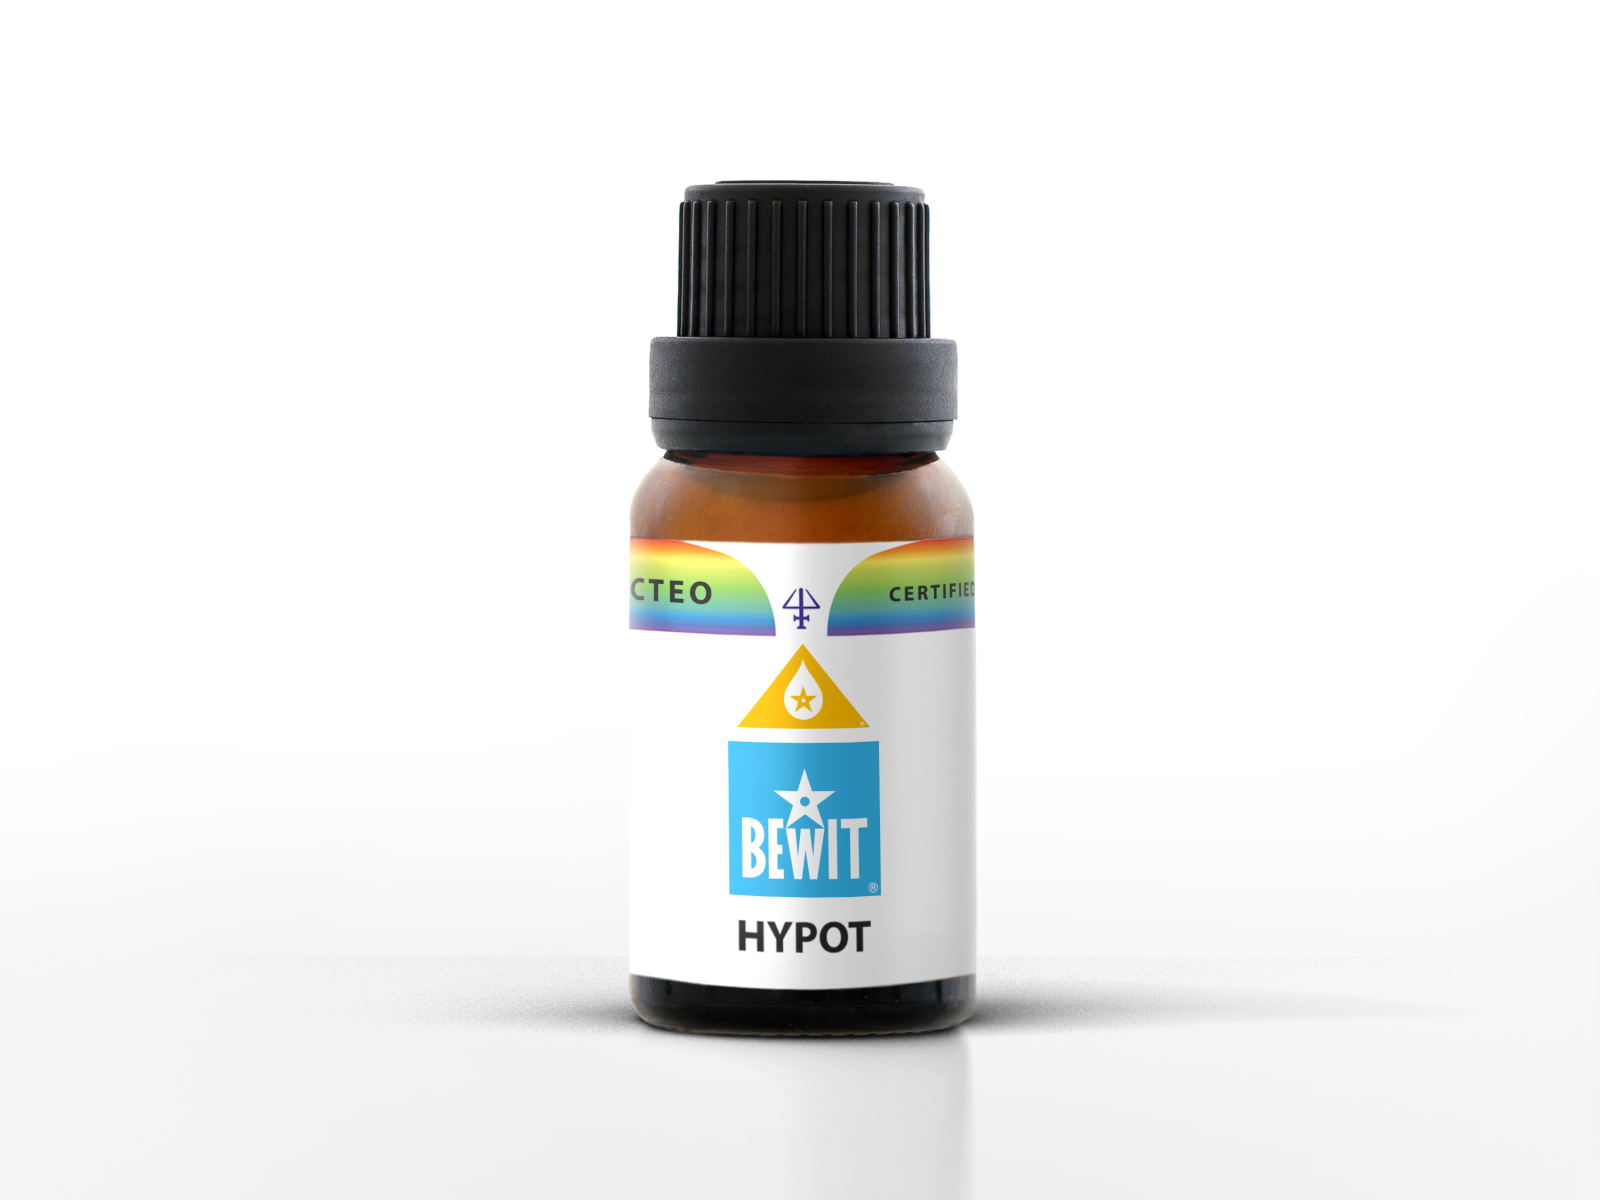 BEWIT. HYPOT - Blend of essential oils